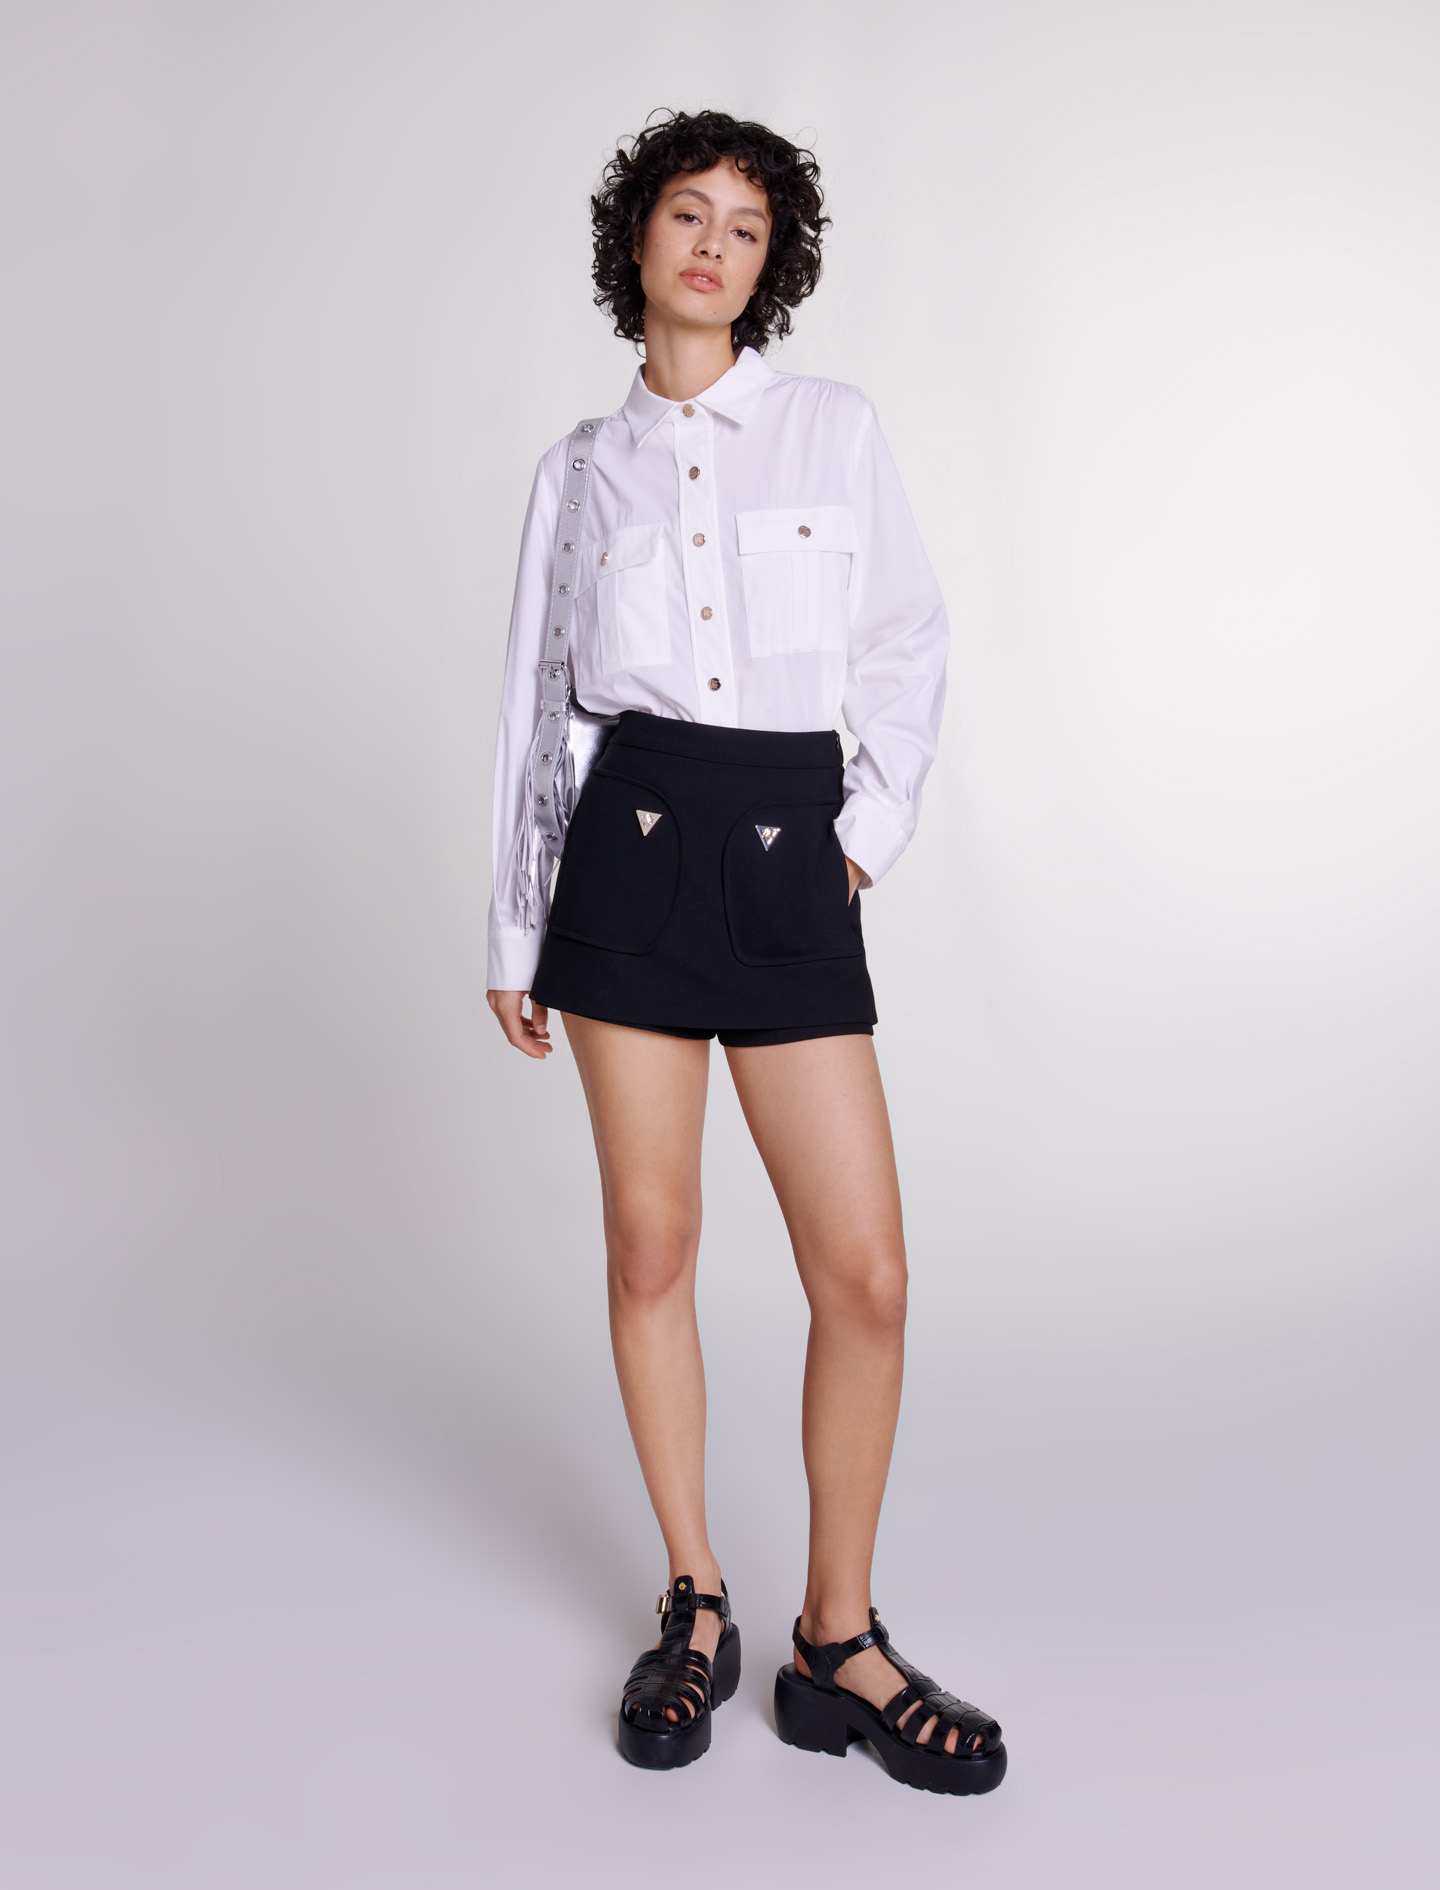 Maje Woman's polyester, Skort-style shorts for Spring/Summer, in color Black / Black